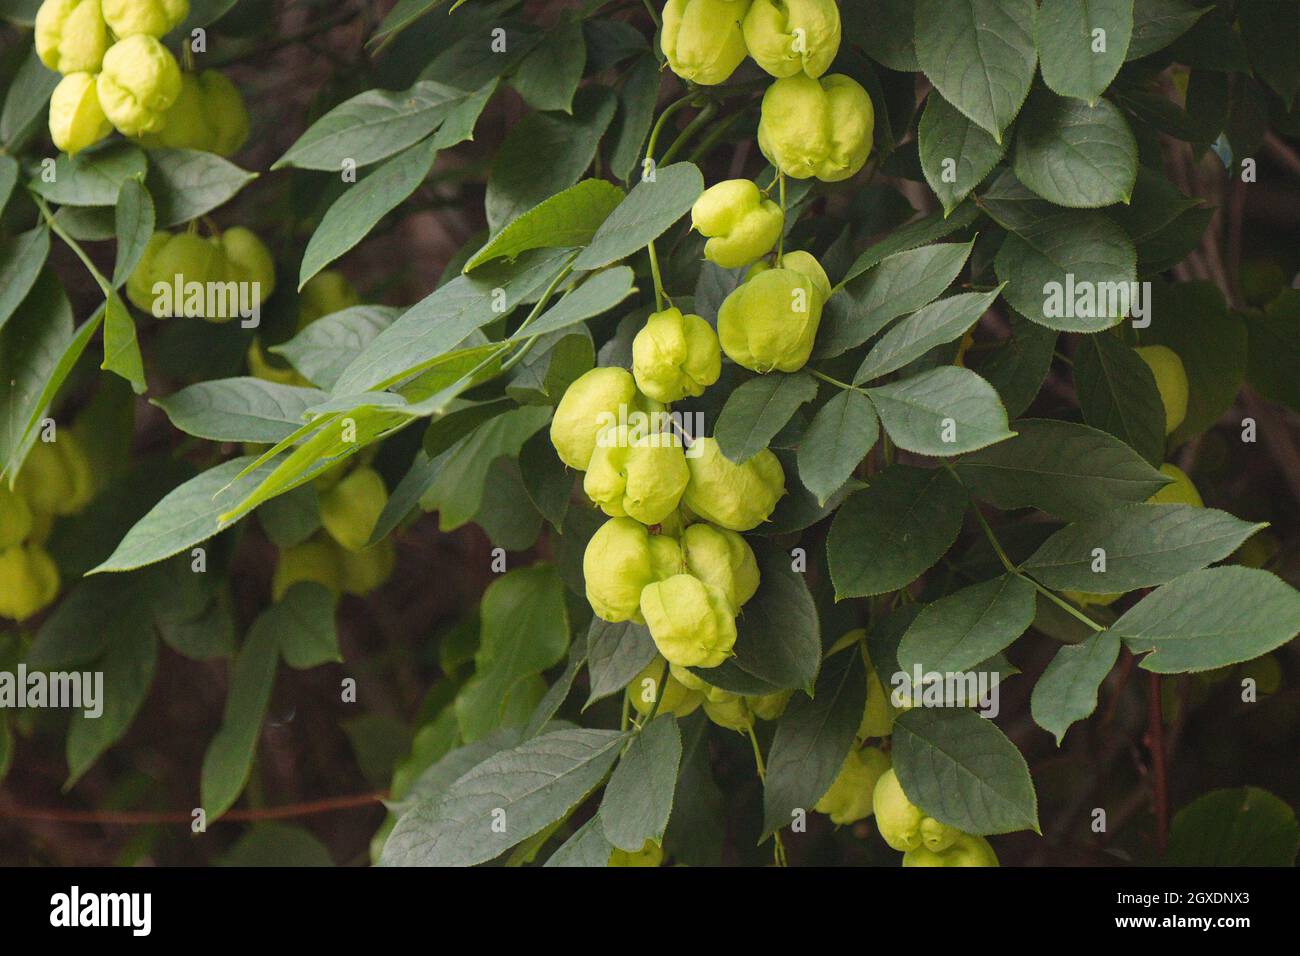 Bladdernut plumose Staphylea pinnata L., fruits and leaves Stock Photo